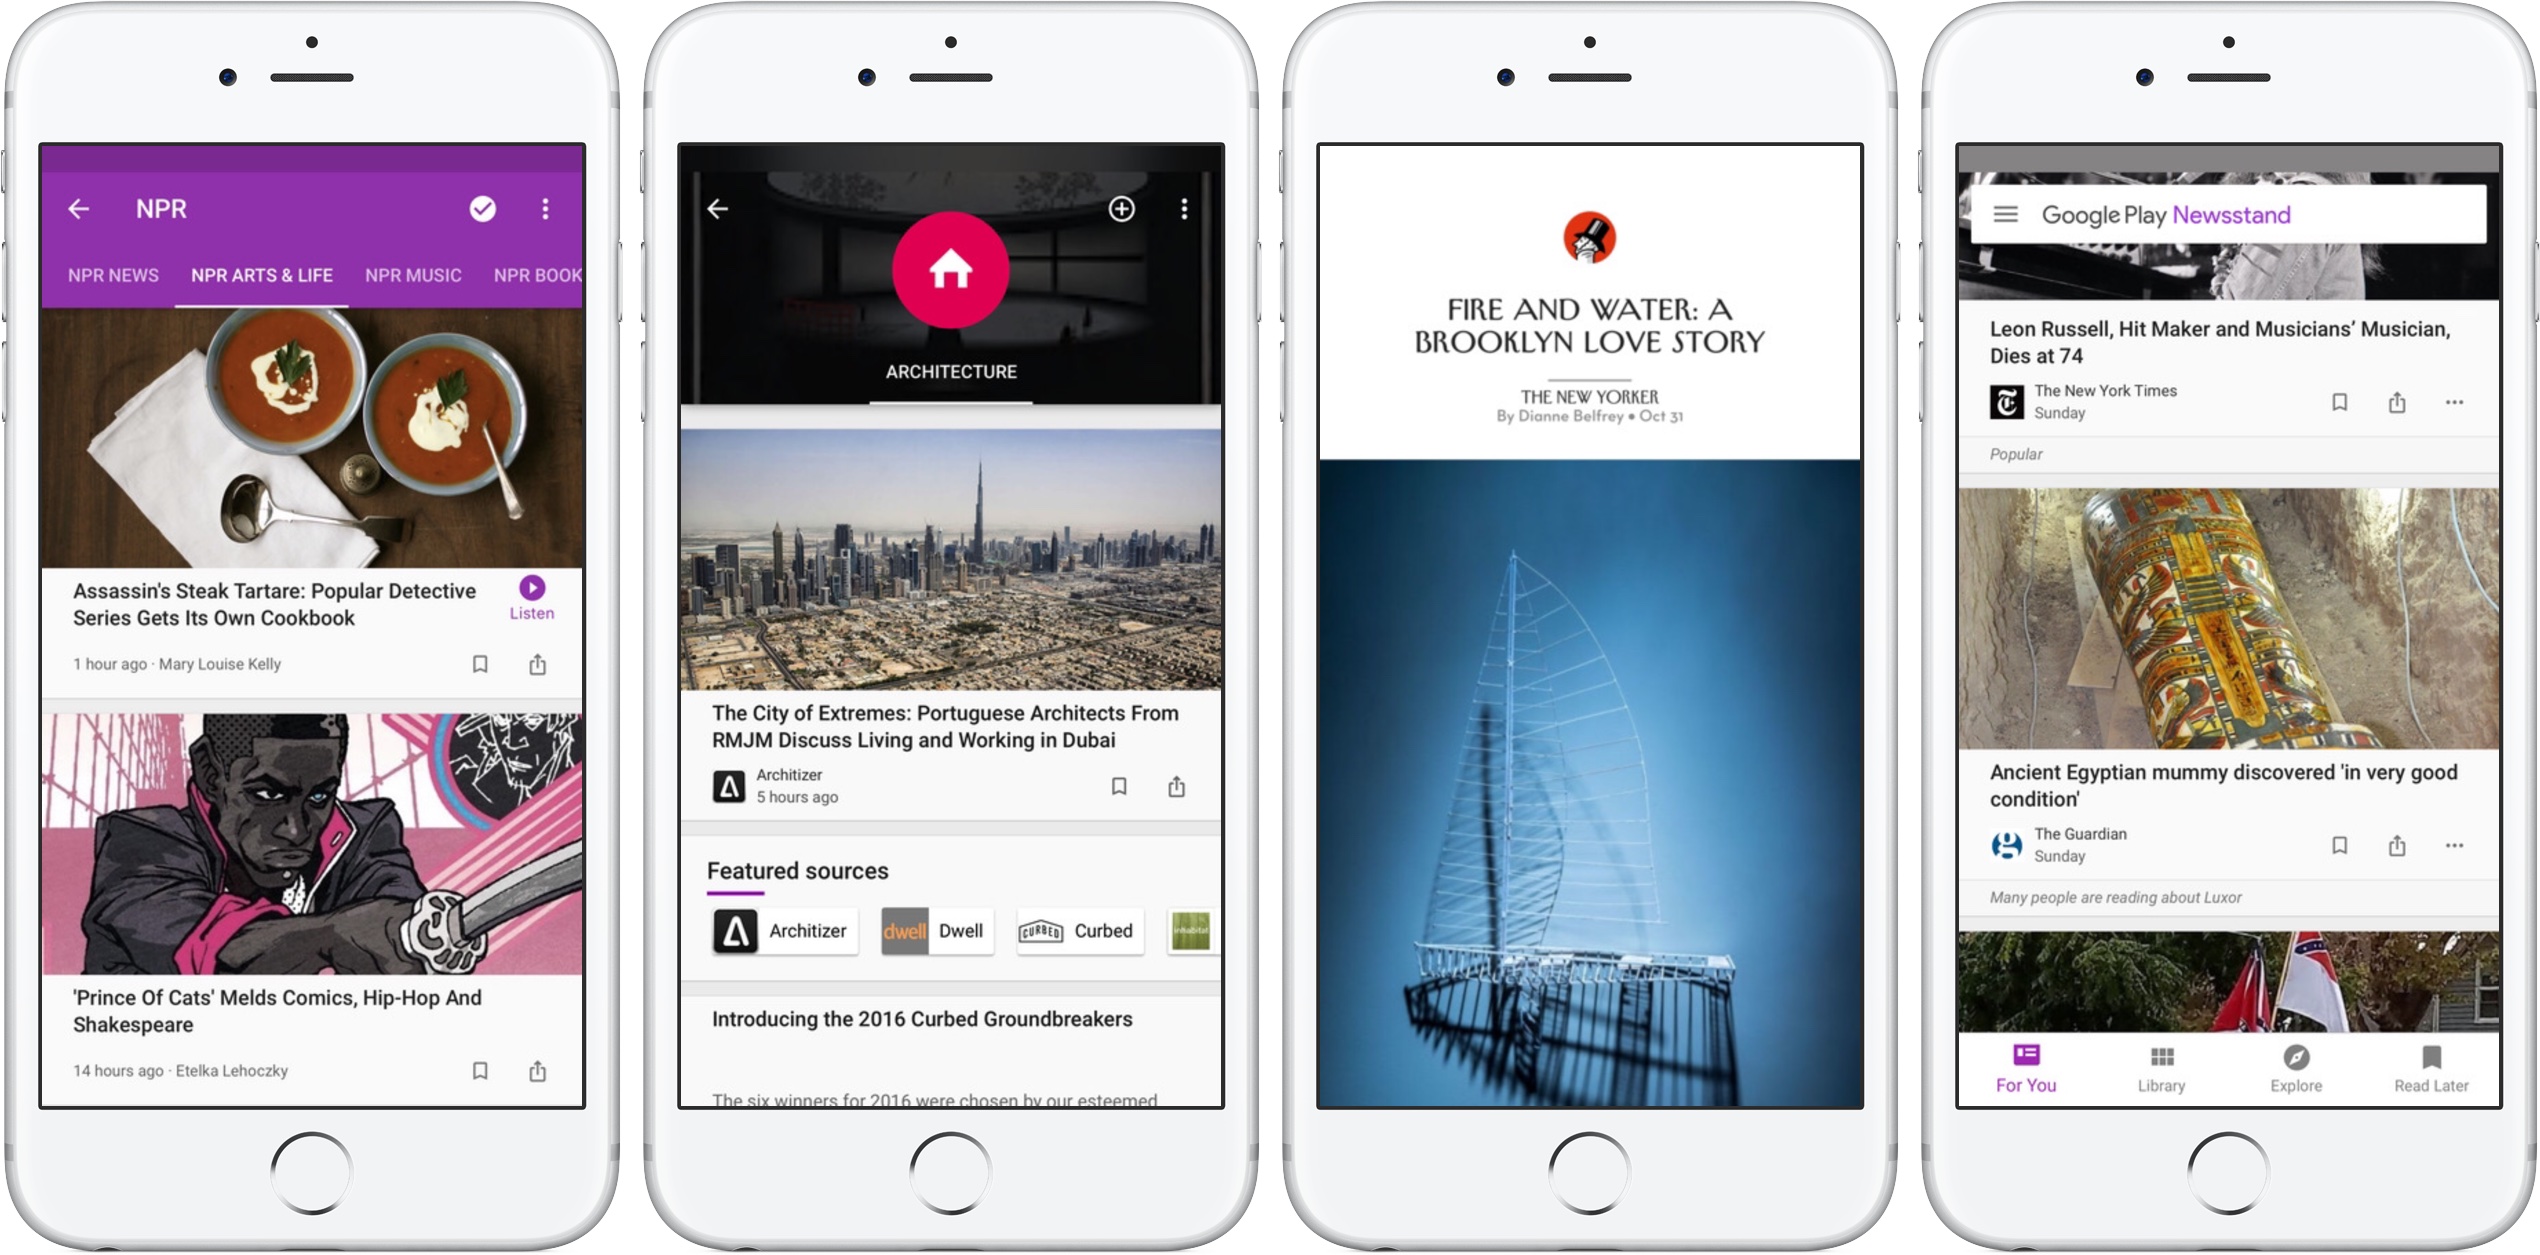 Google Play Newsstand 4.0 for iOS iPhone screenshot 001